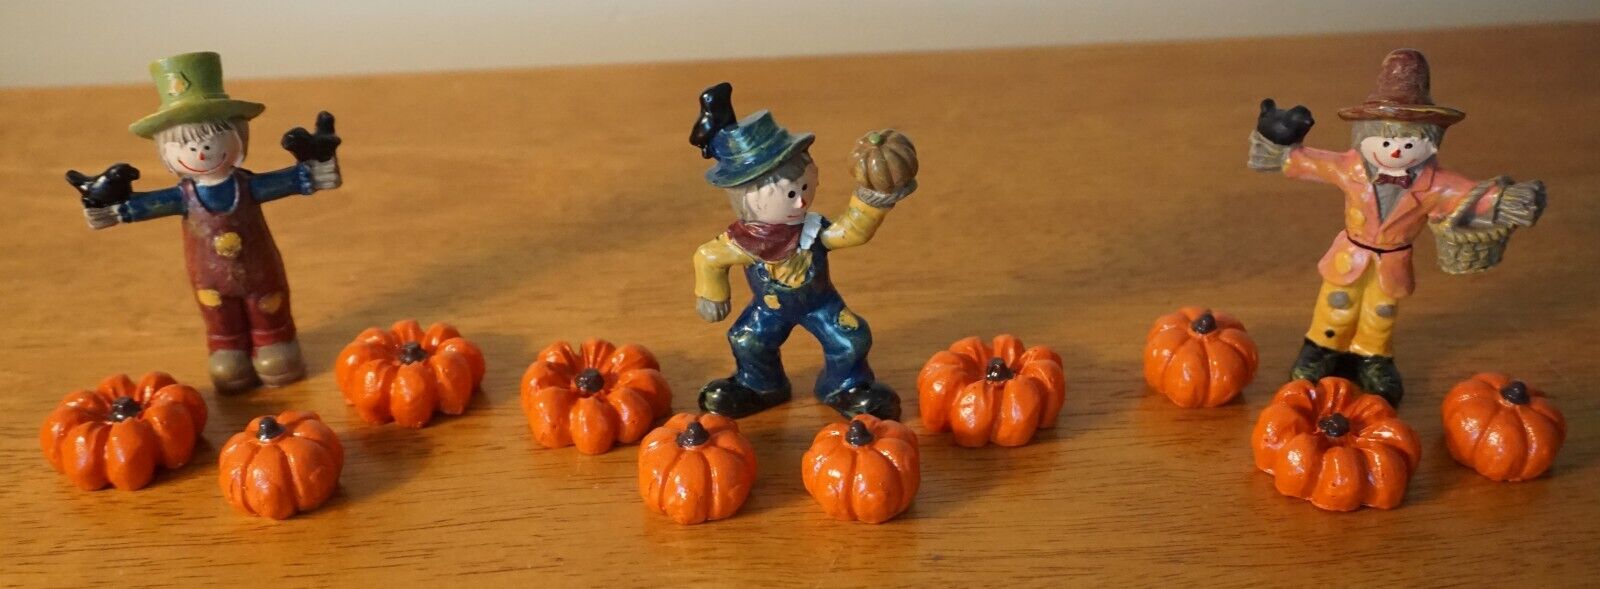 13 Piece Figurine Set 3 Scarecrows 10 Pumpkins Mini Halloween Fall Village NEW